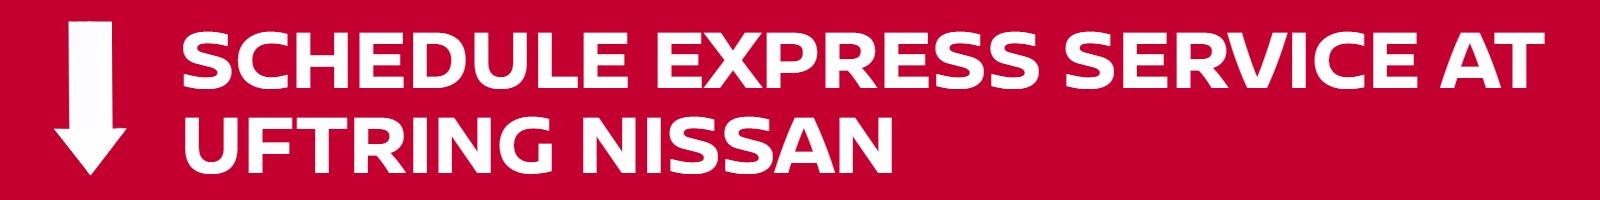 Schedule Express Service at Uftring Nissan